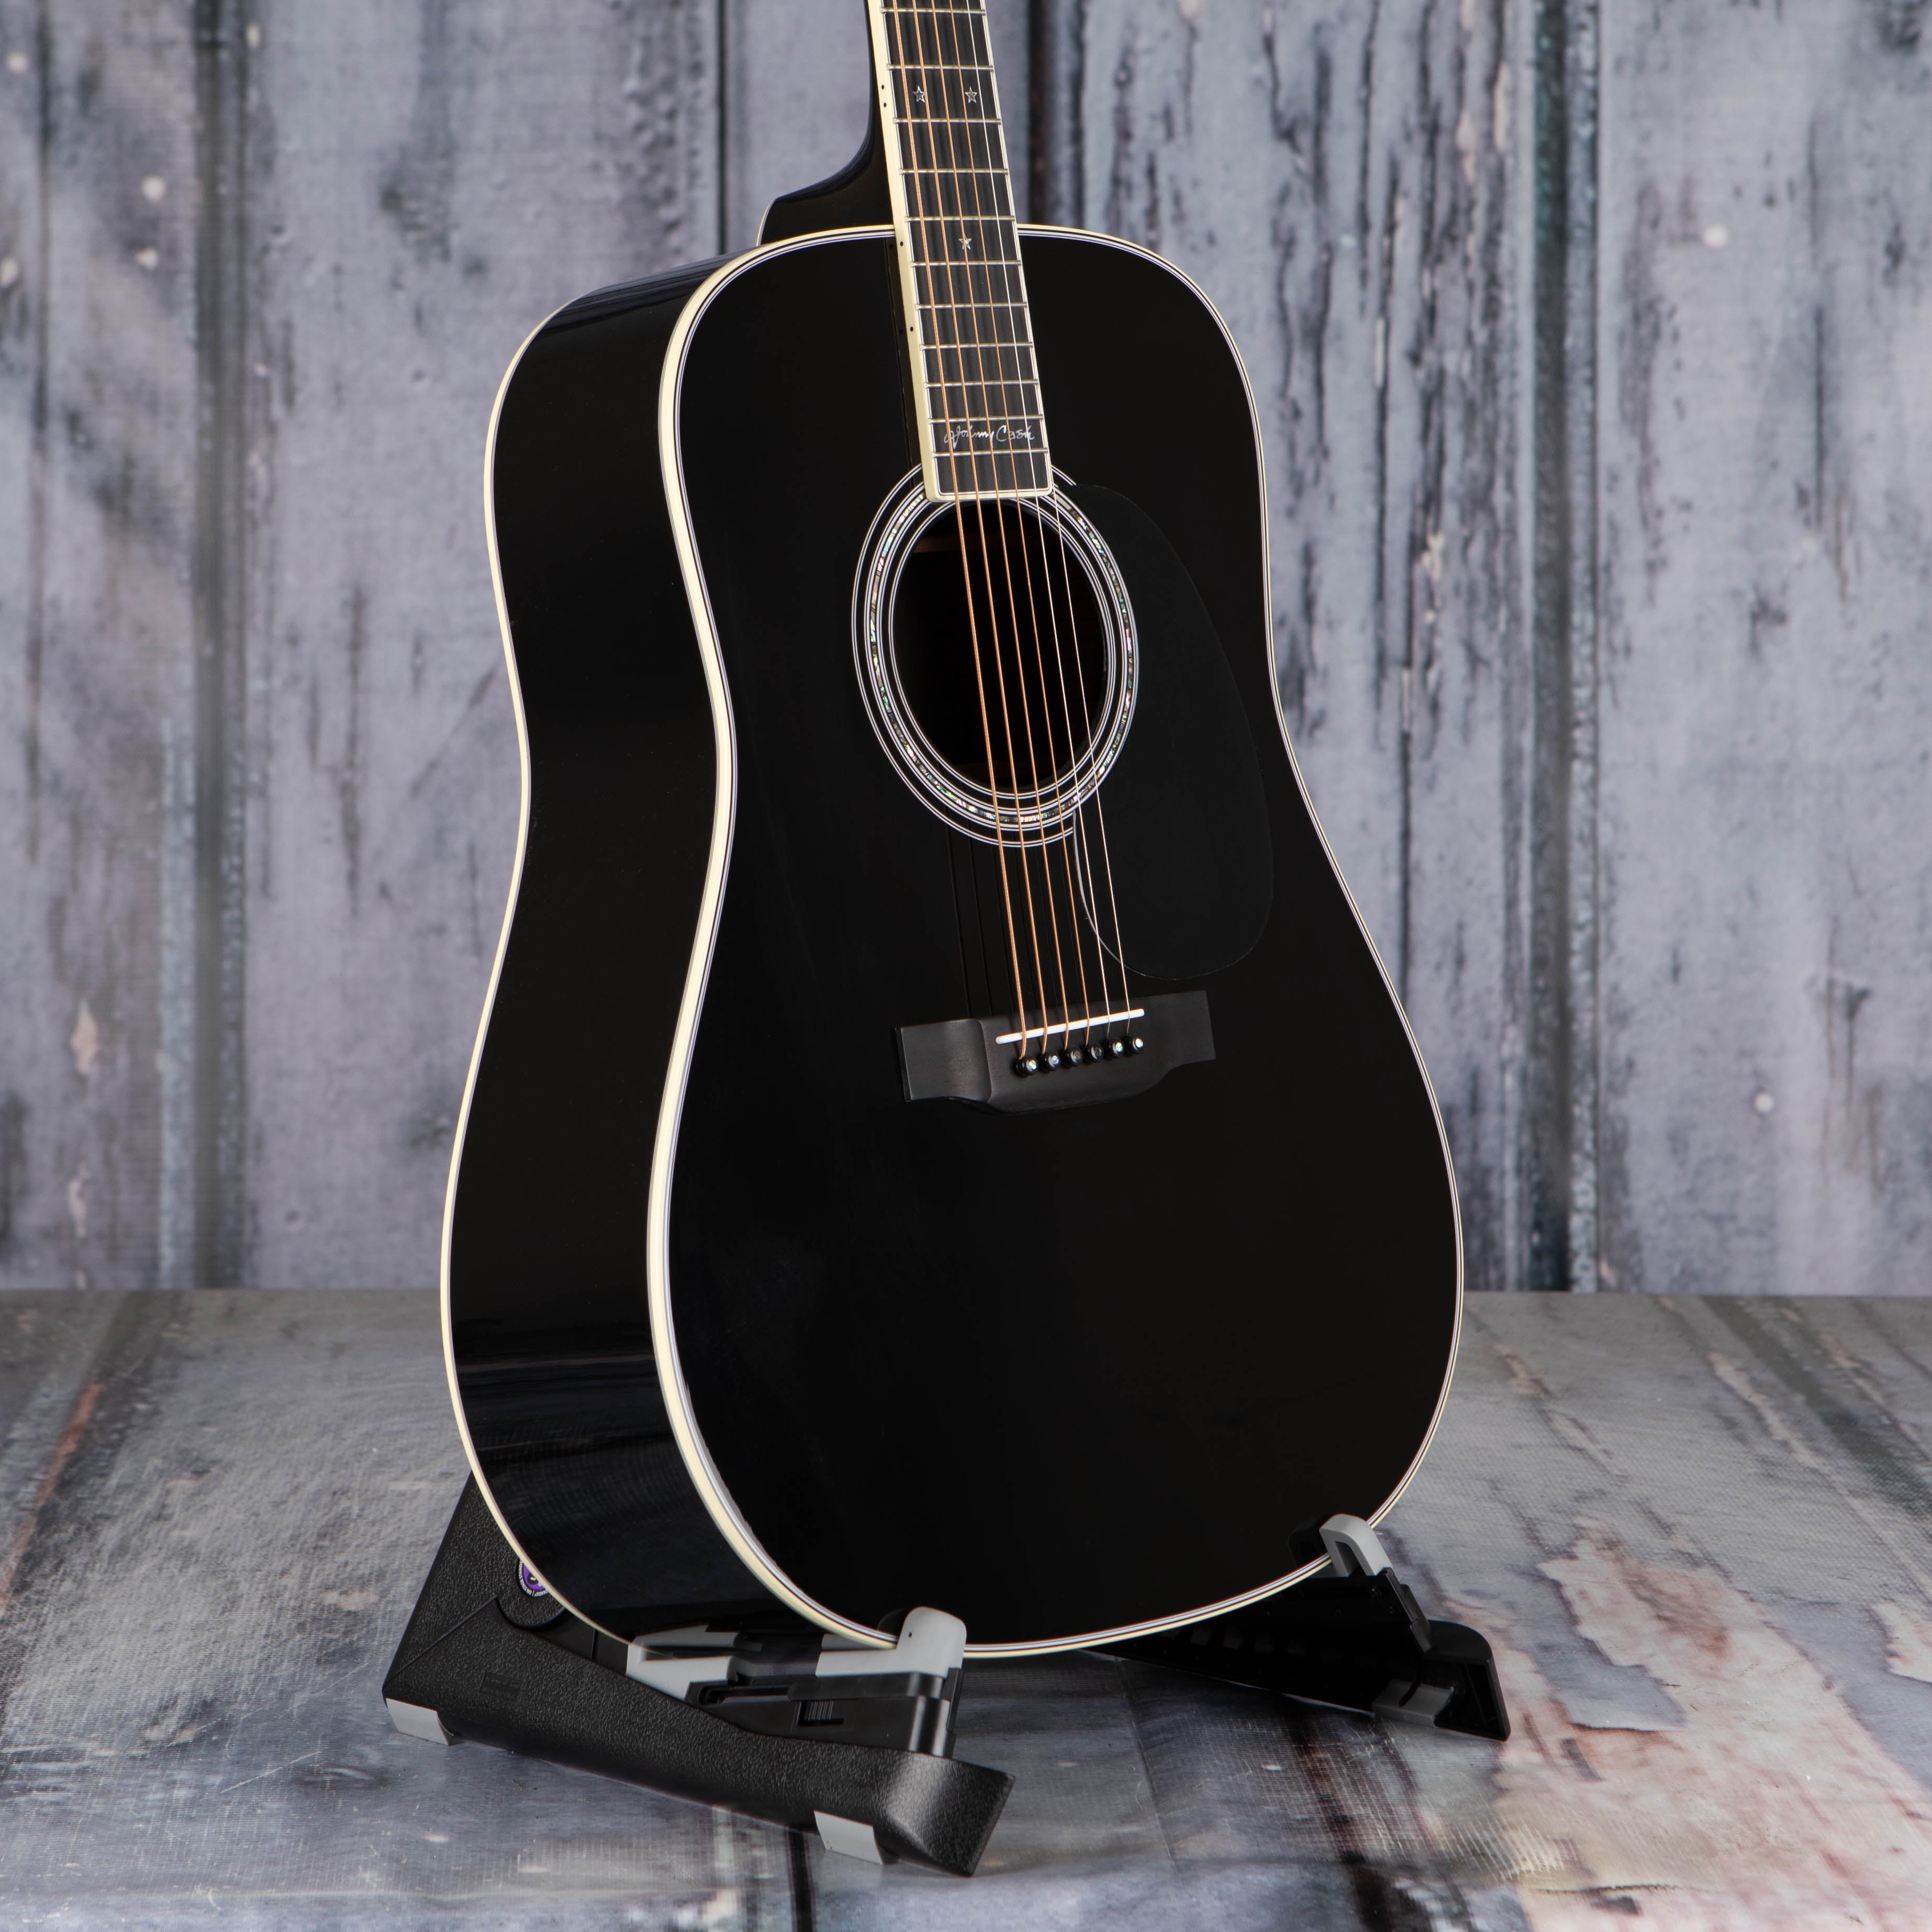 Martin D-35 Johnny Cash Acoustic Guitar, Black, angle